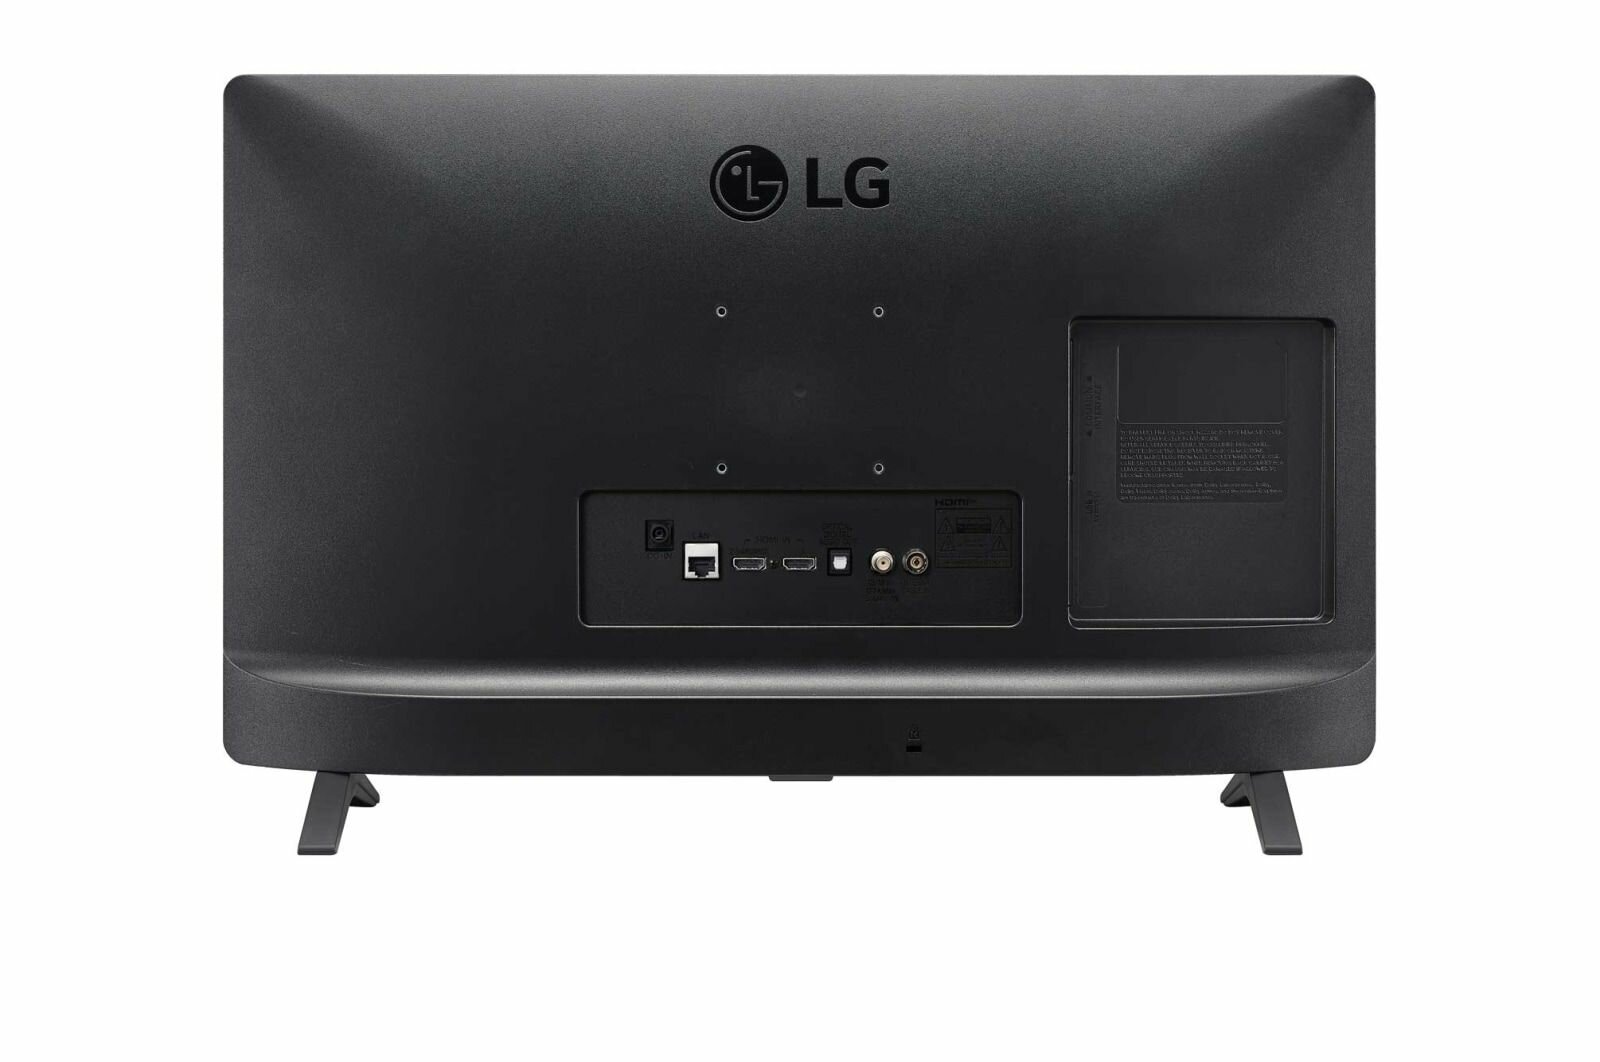 Телевизор LG 24TQ520S-PZ